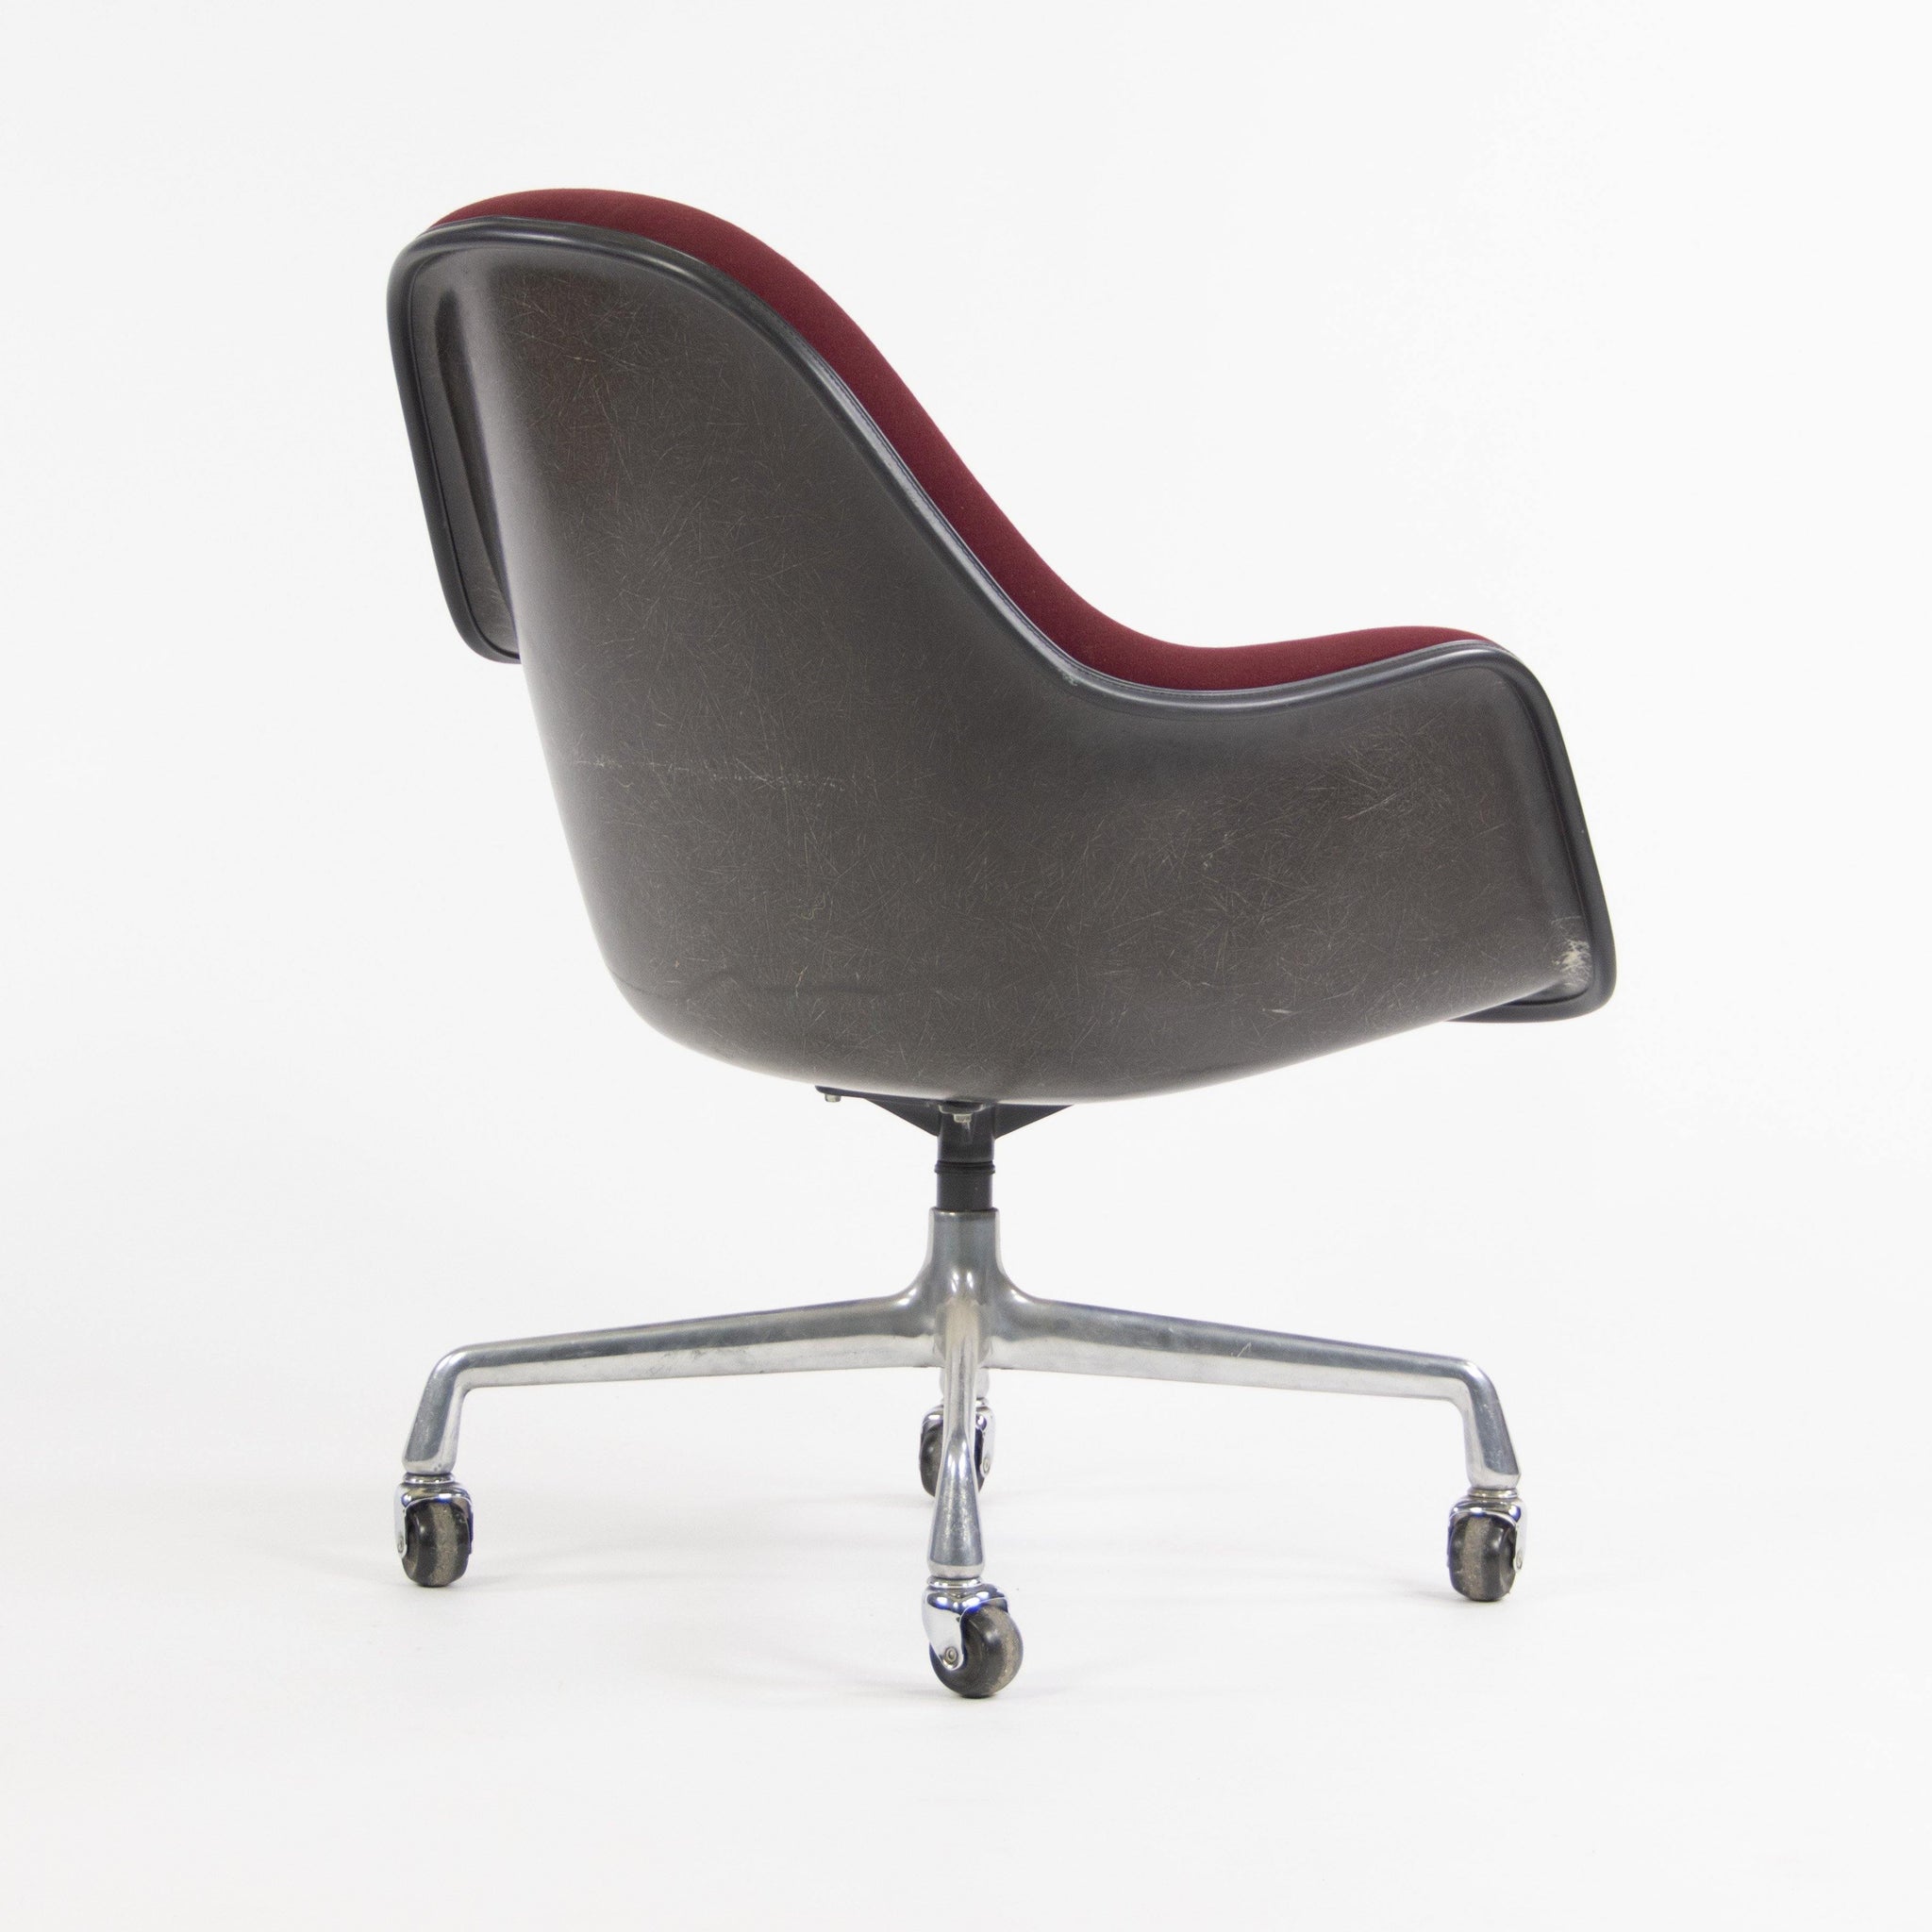 1985 Eames Herman Miller EC175 Upholstered Fiberglass Shell Chair Museum Quality - Rarify Inc.